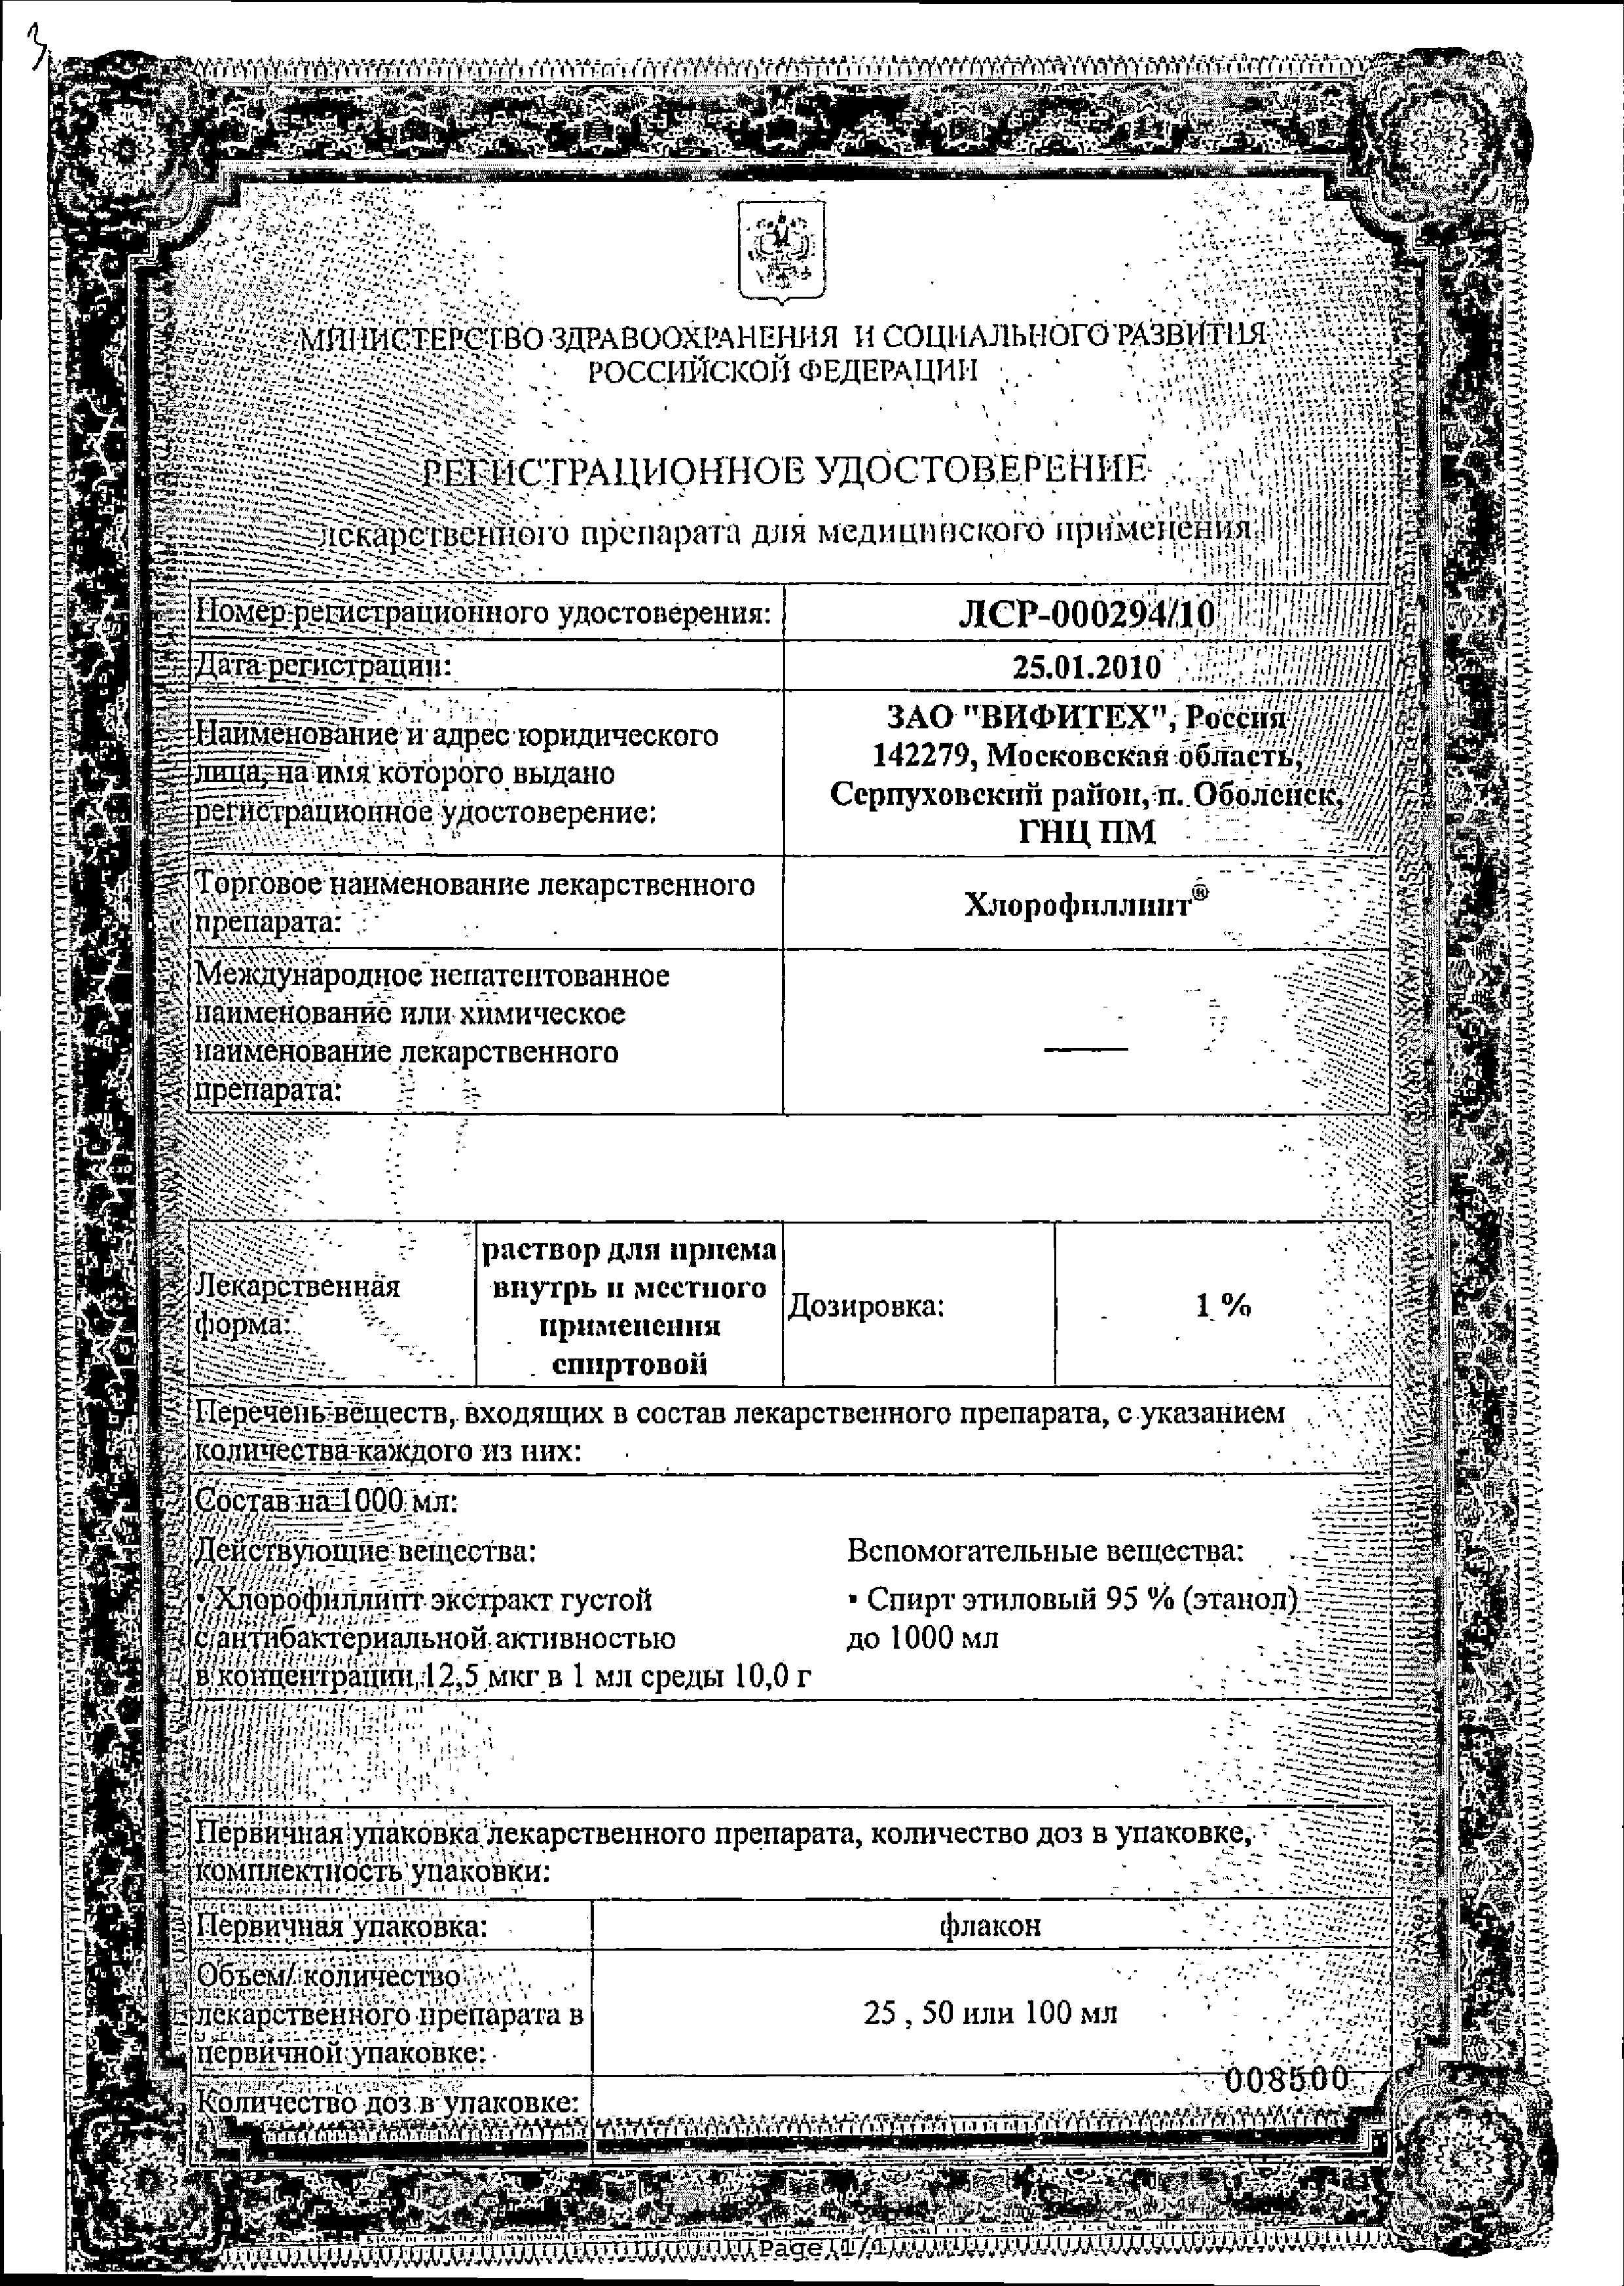 Хлорофиллипт сертификат